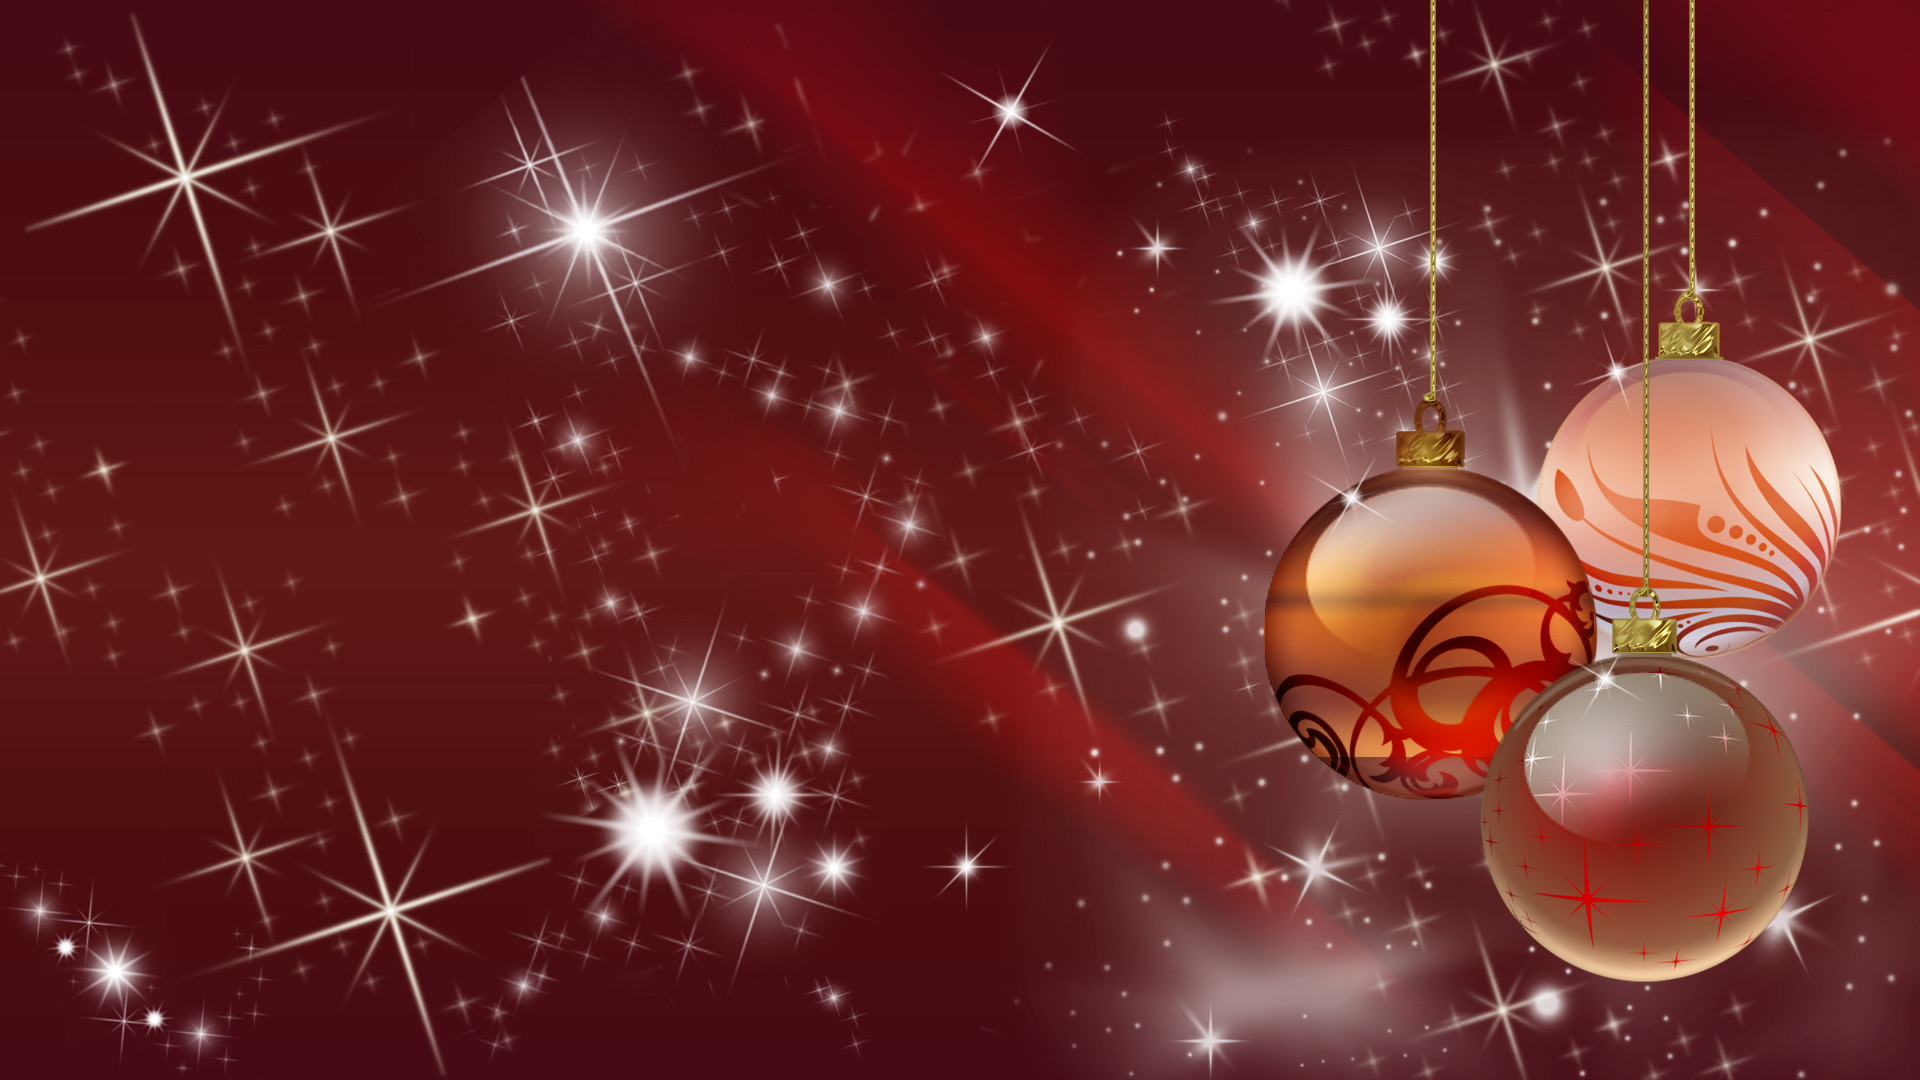 1920x1080 Animated Christmas Backgrounds